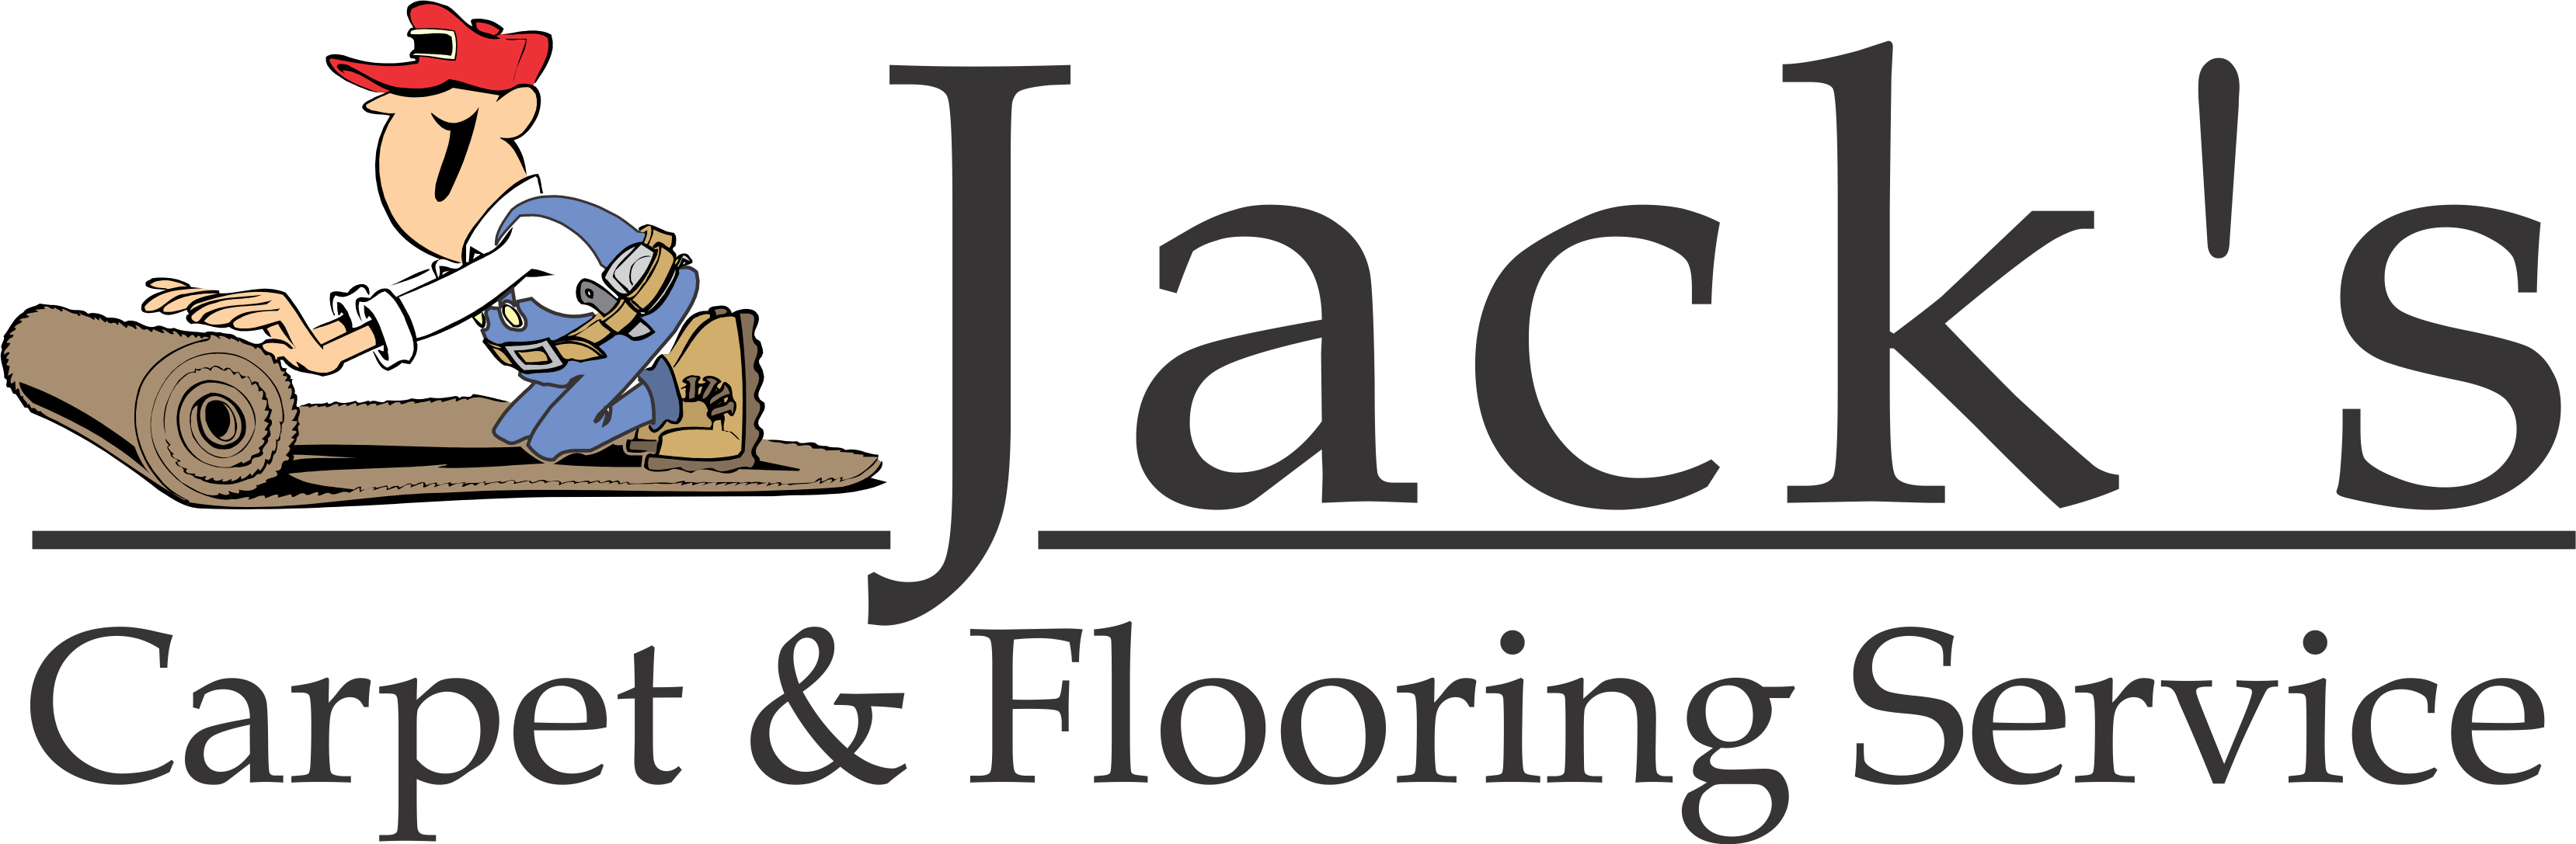 Jacks Carpet Service